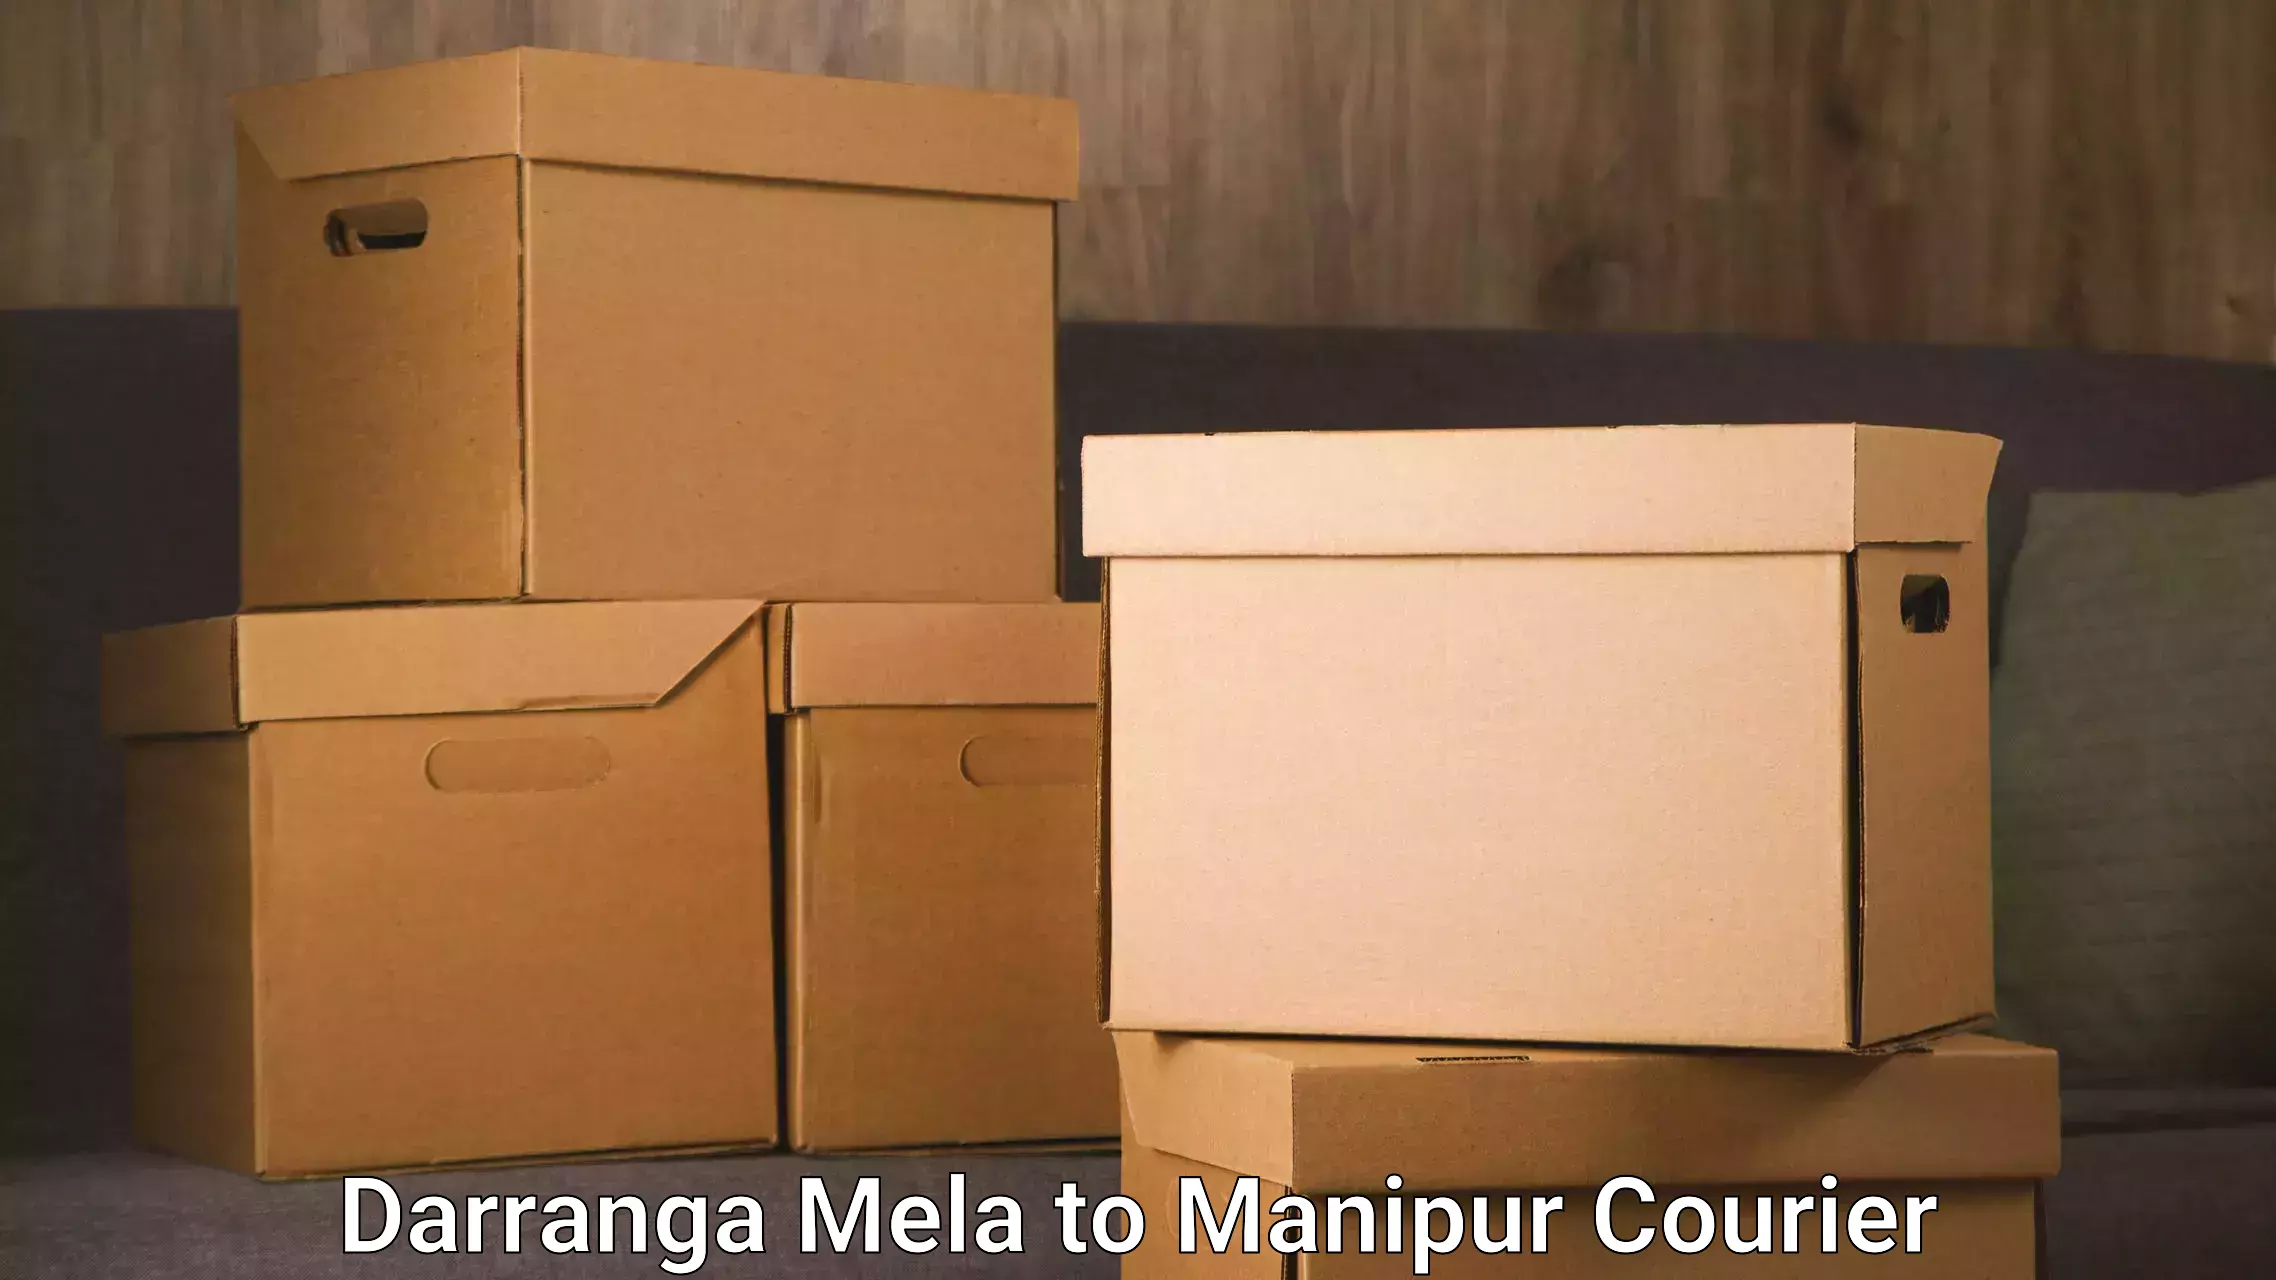 Logistics management Darranga Mela to Manipur